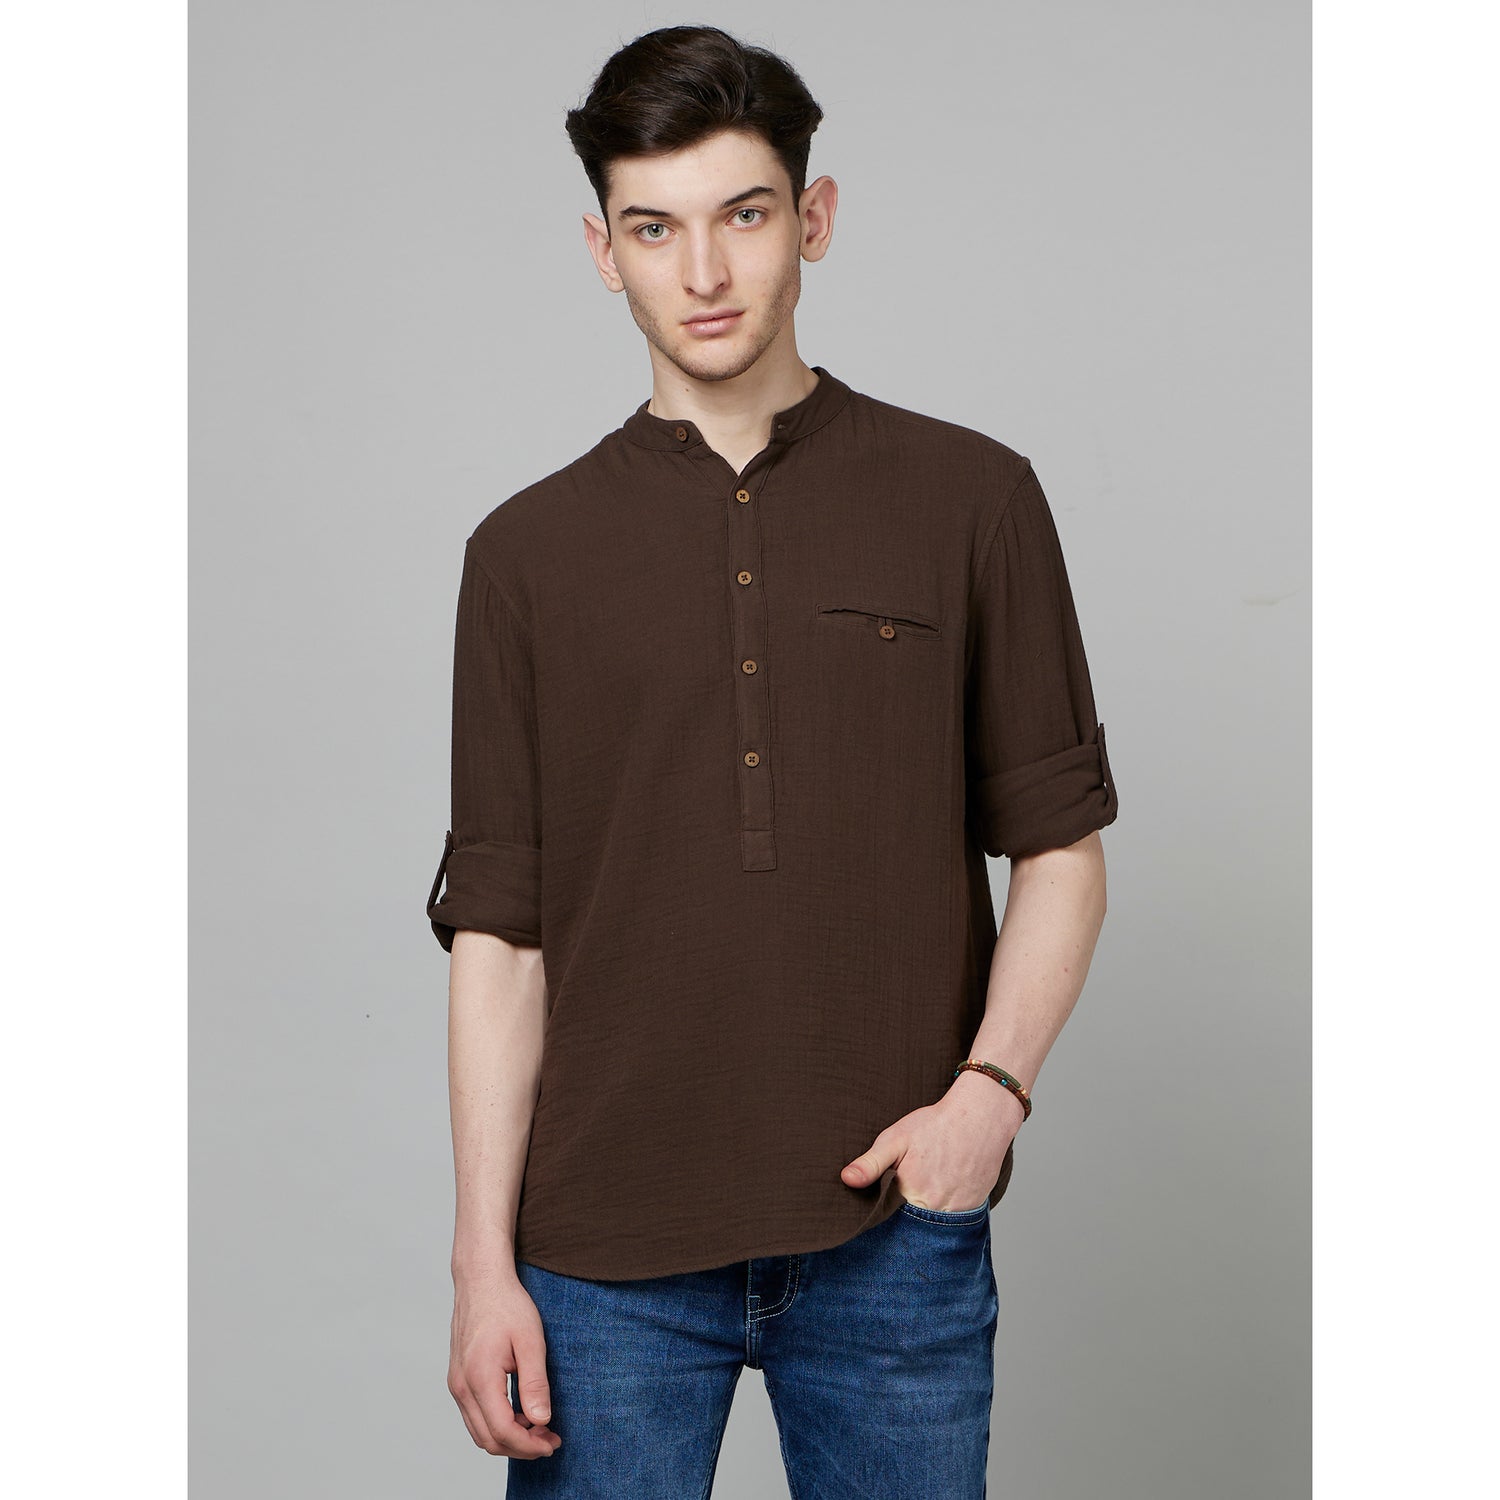 Brown Classic Mandarin Collar Cotton Casual Shirt (FADOUBLE)